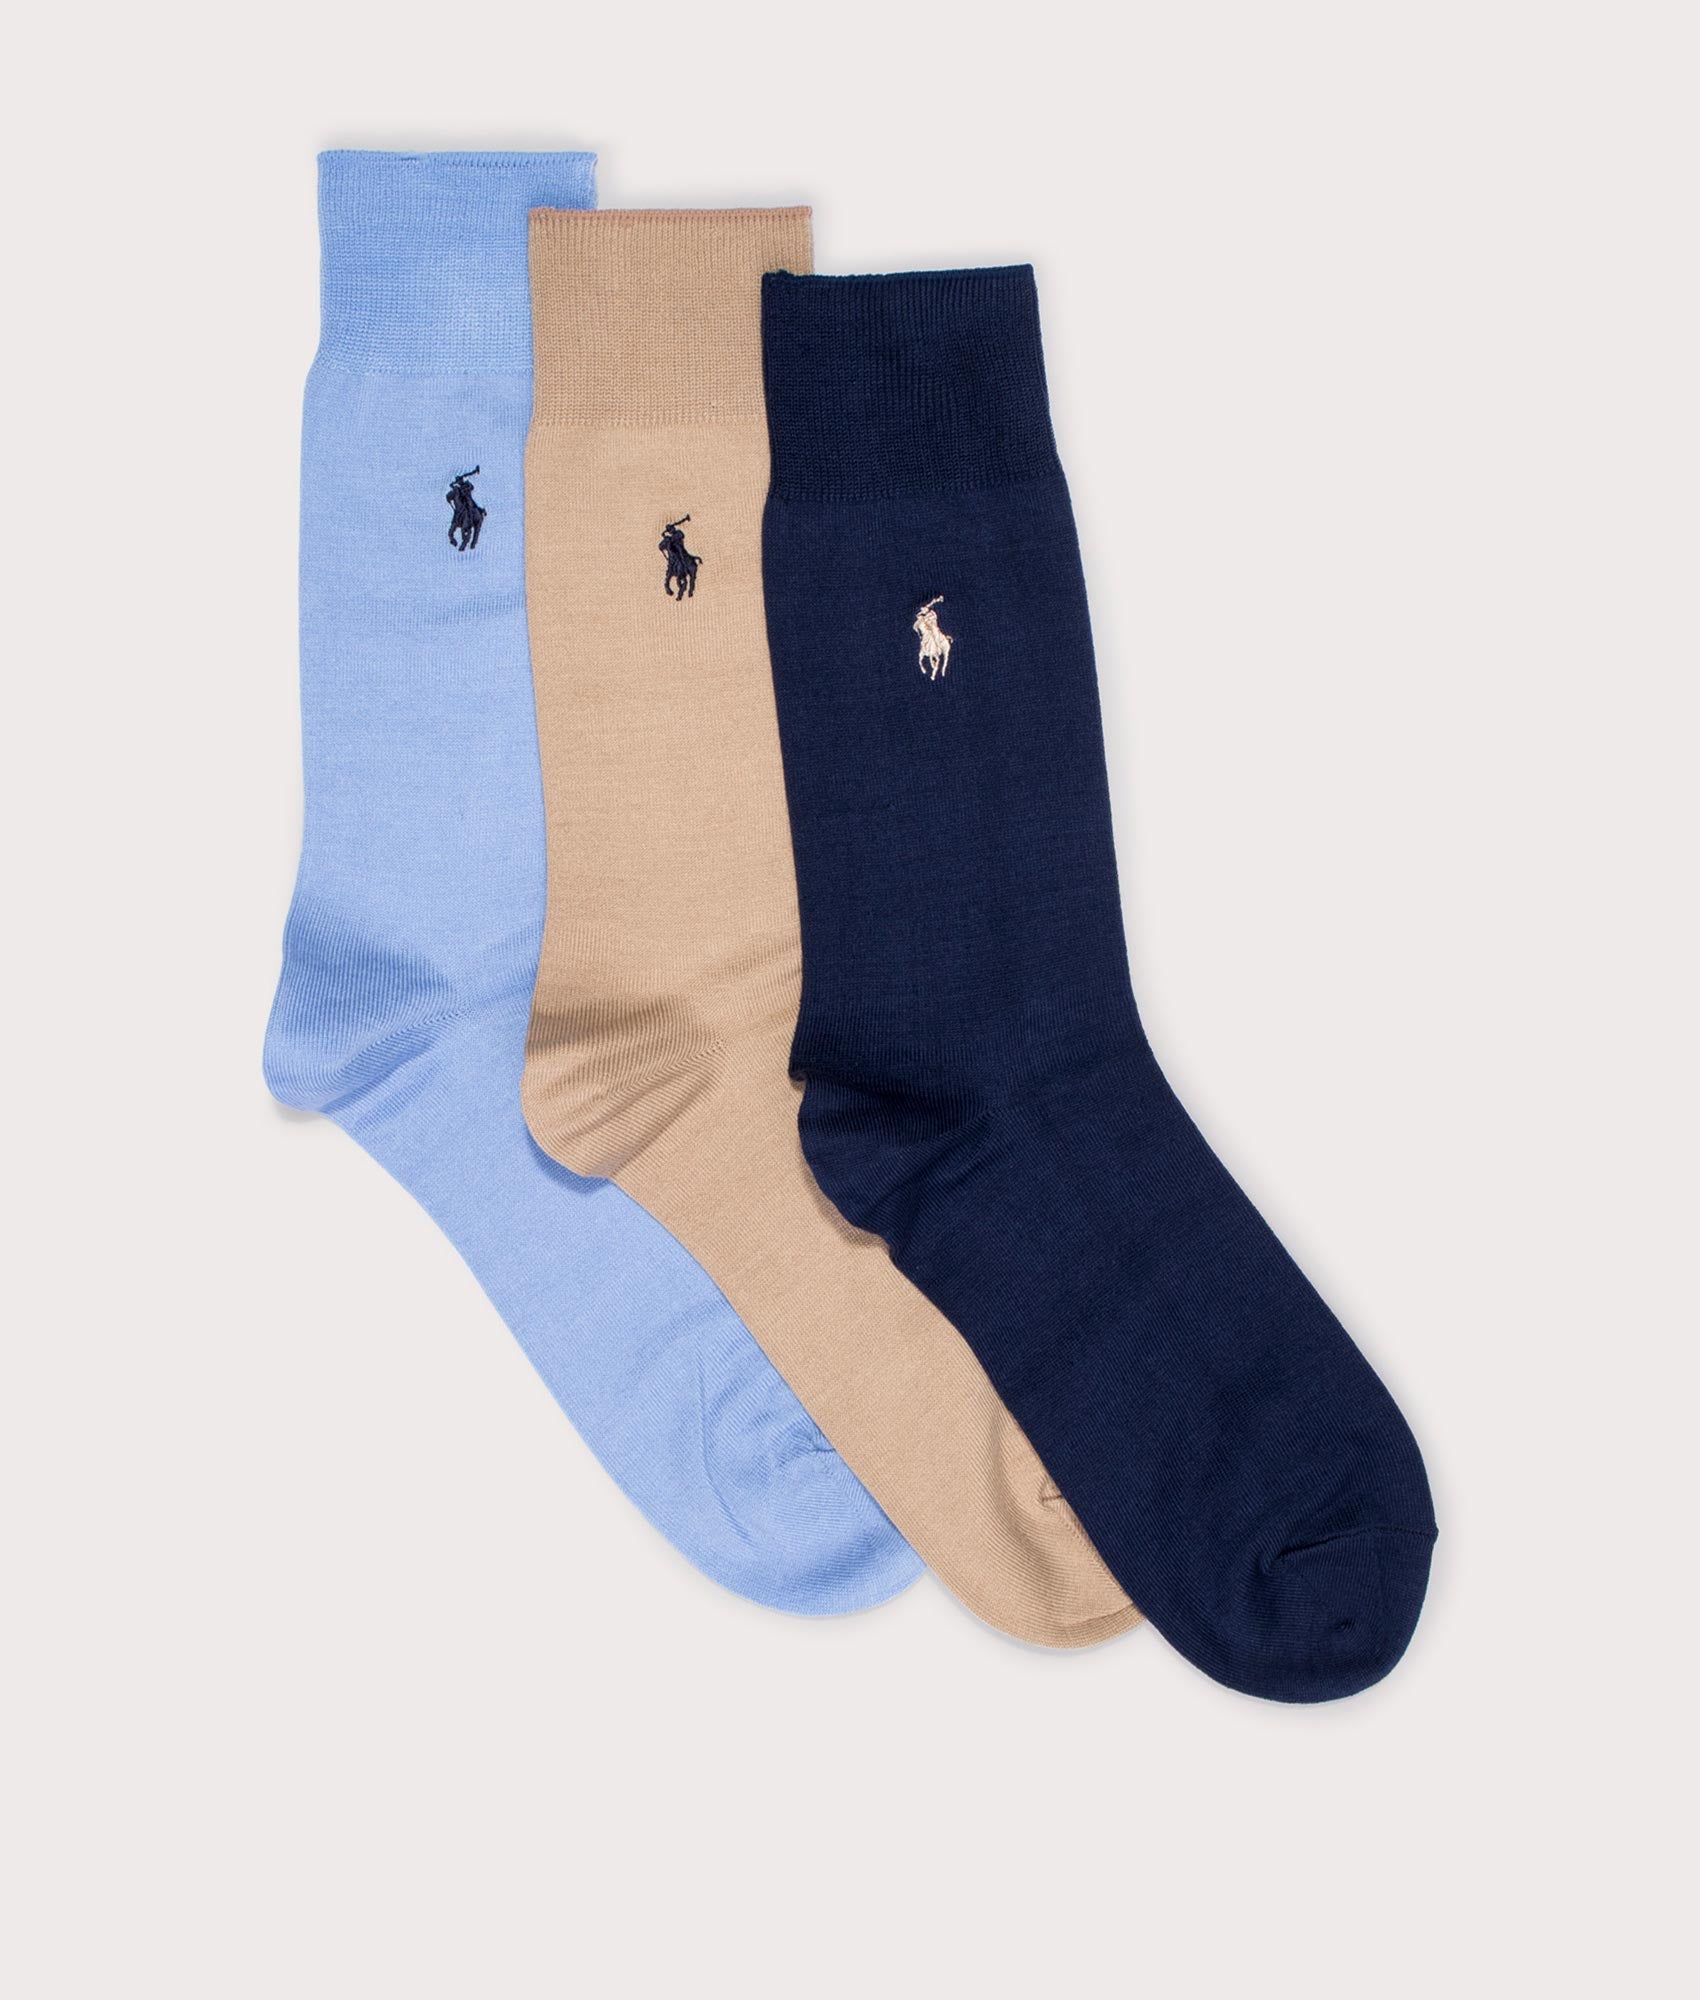 Polo Ralph Lauren Mens 3 Pack Crew Socks - Colour: 003 Blue/Sand/Navy - Size: One Size